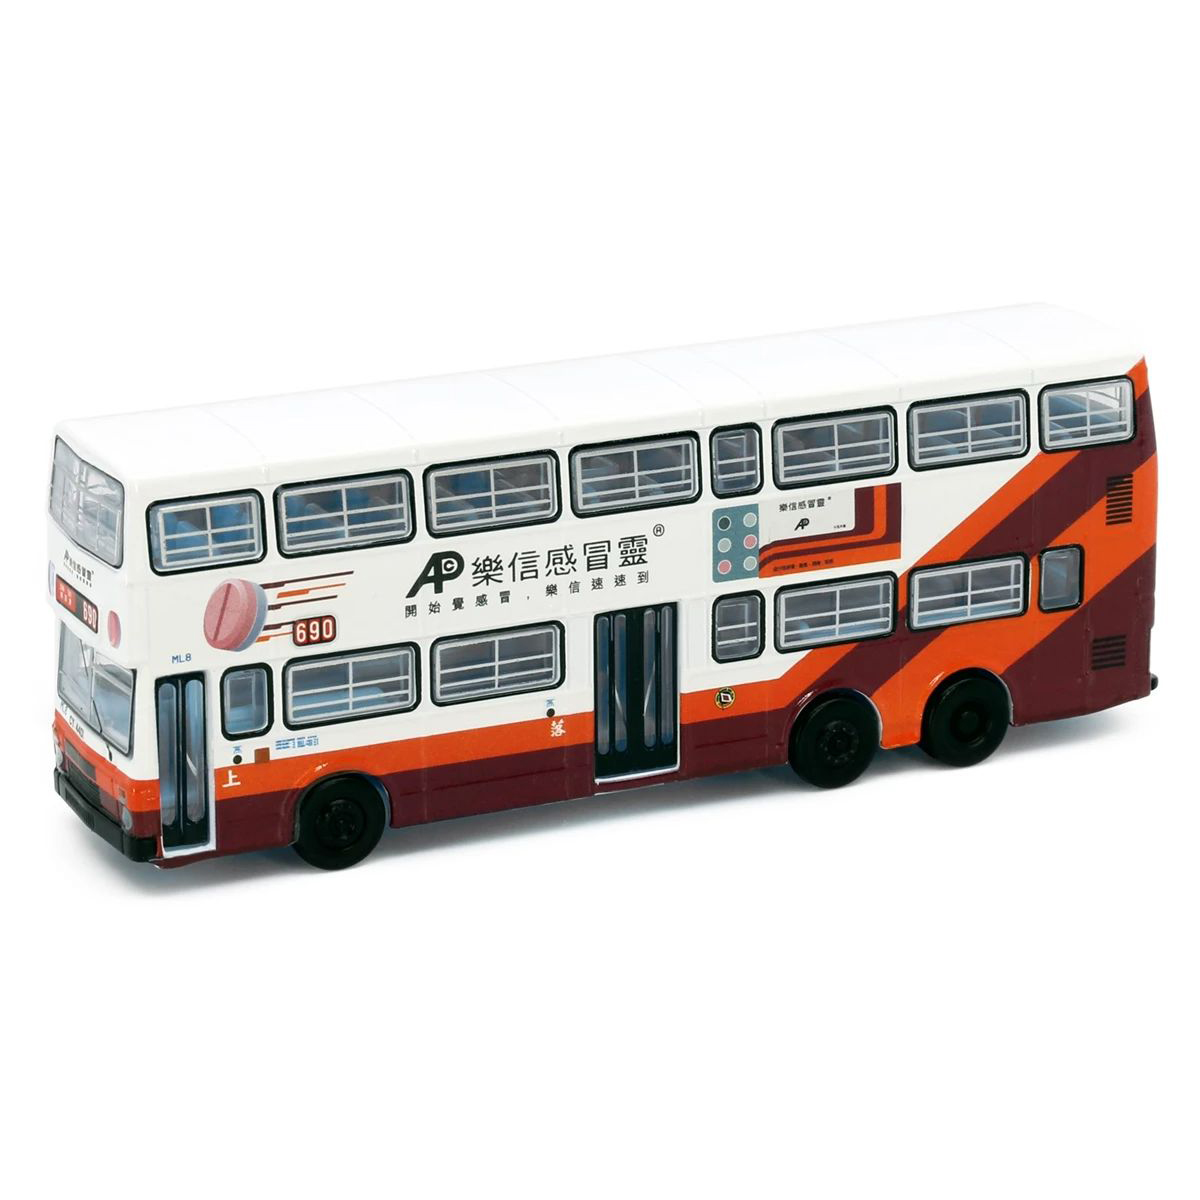 TINY微影城市中巴 MCW Metrobus 12m乐信感冒灵(690)合金车模-封面